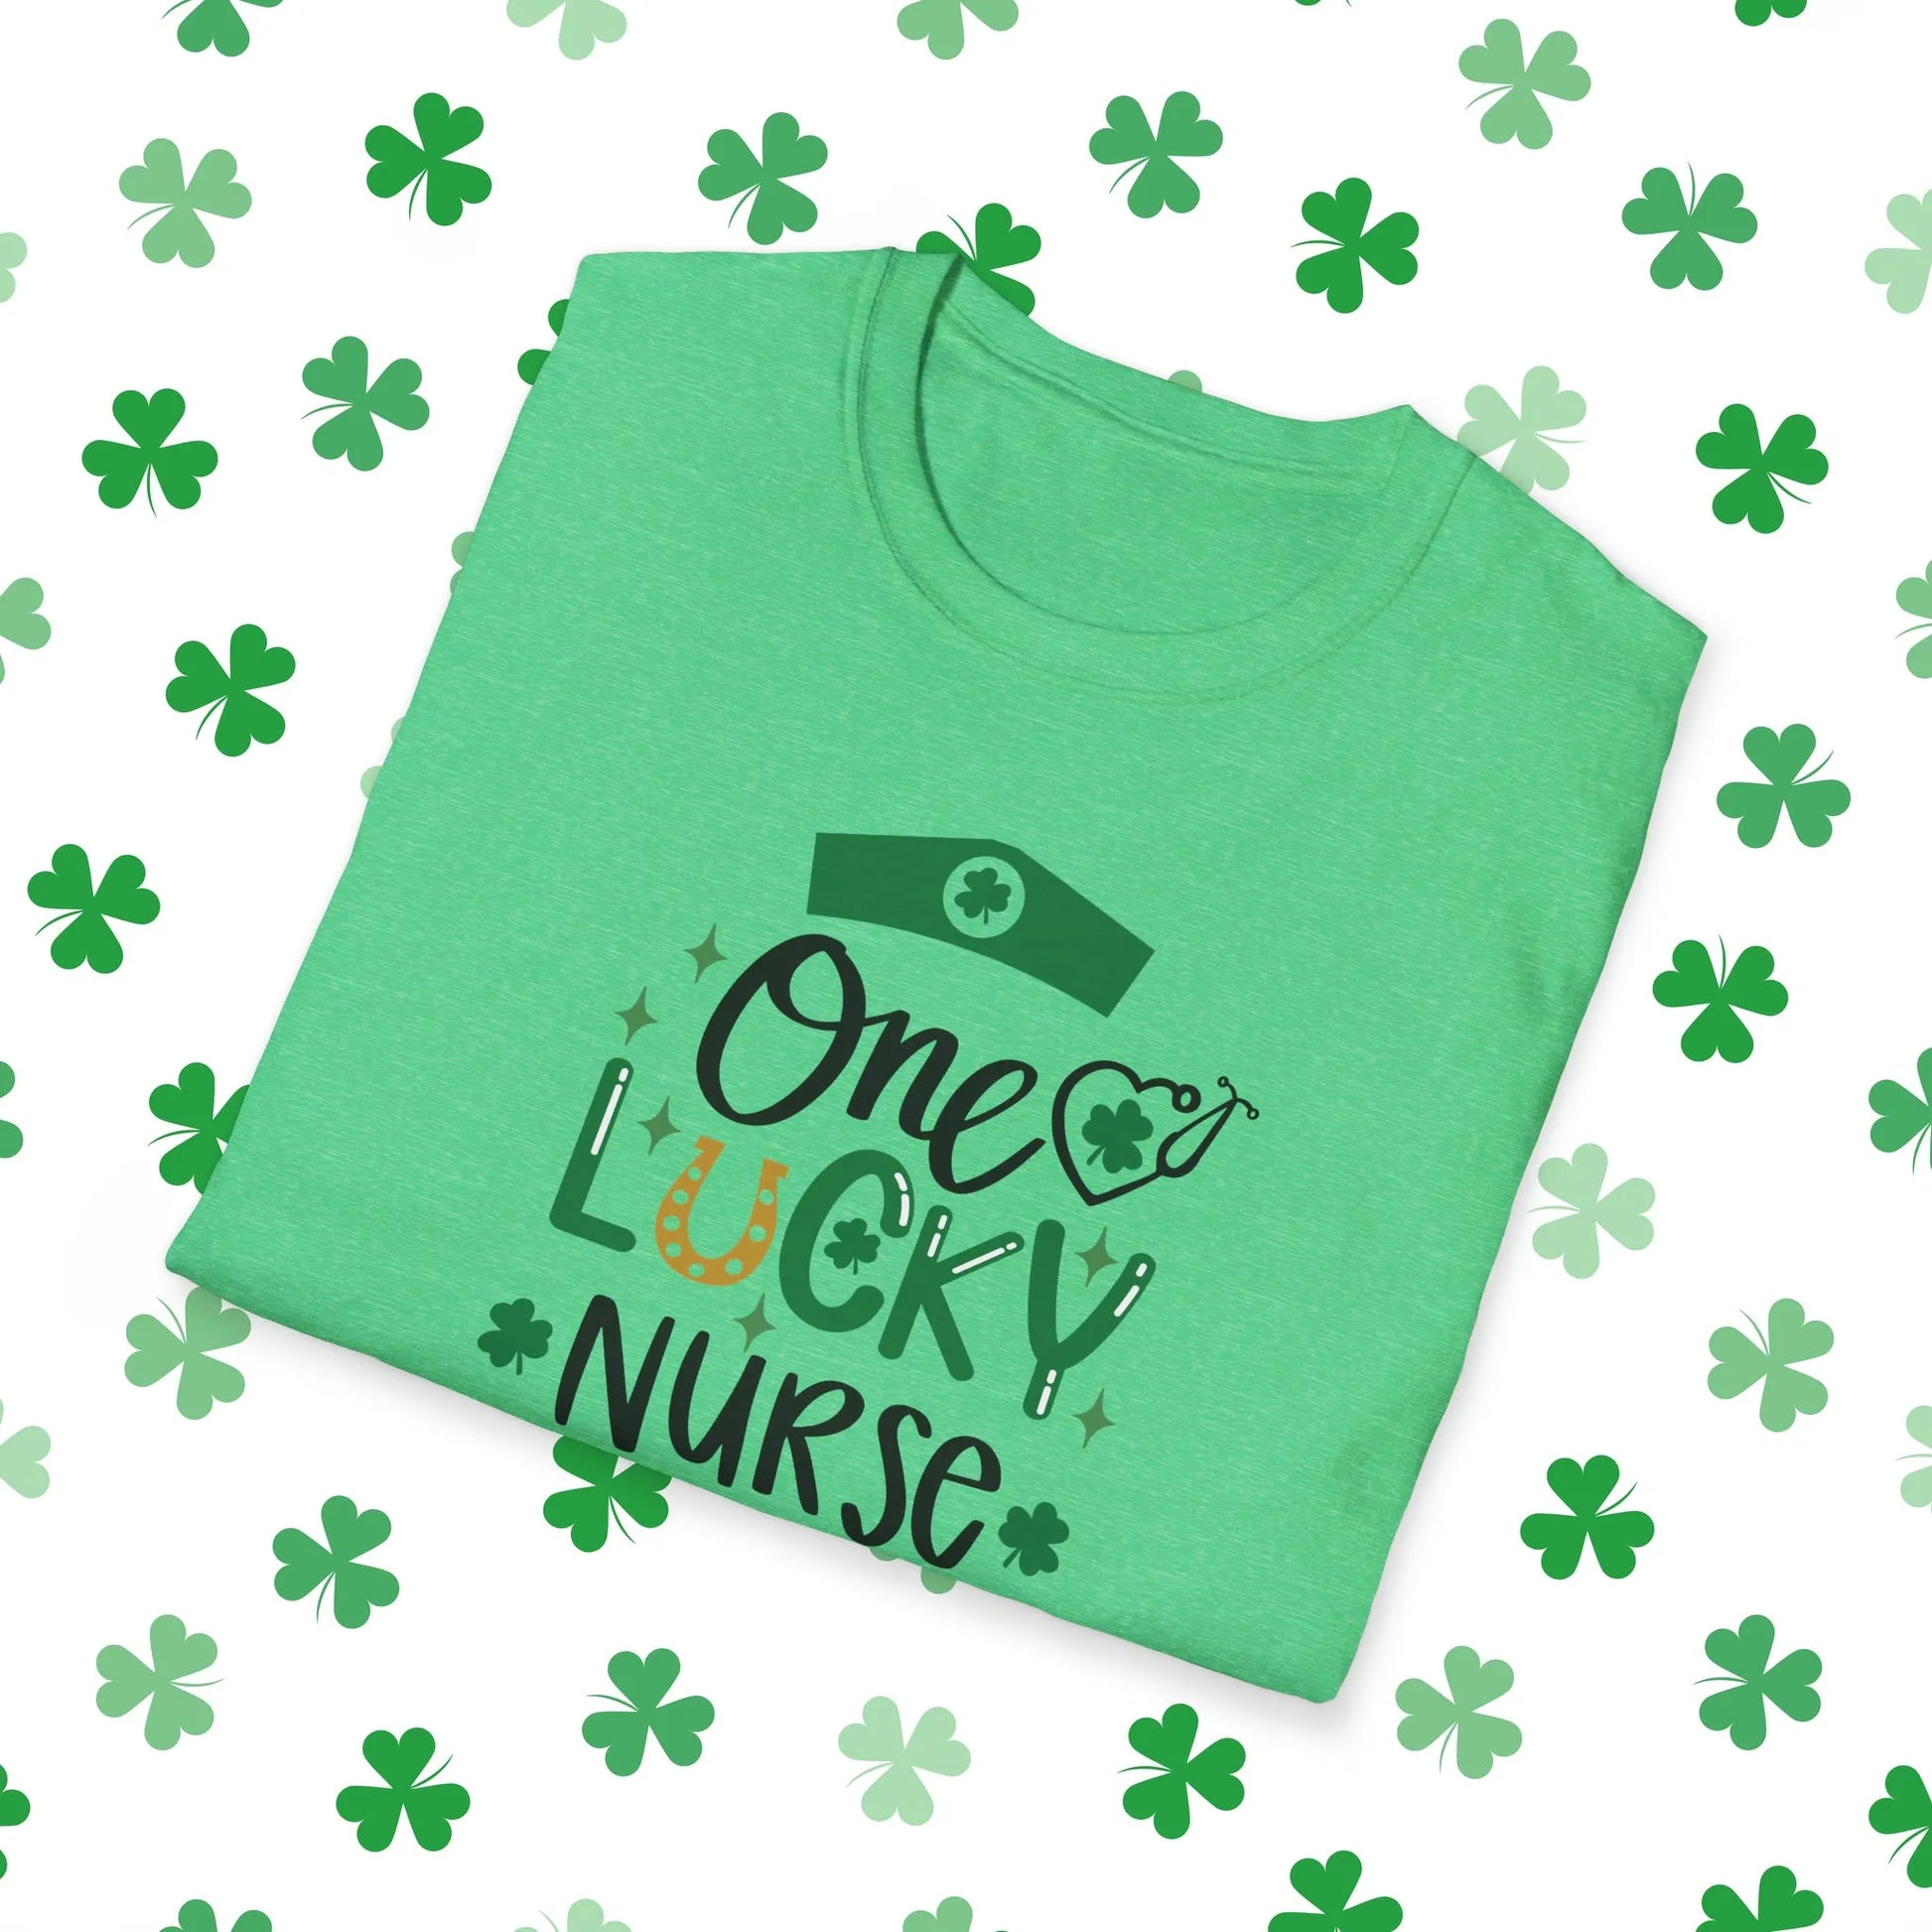 One Lucky Nurse St. Patrick's Day T-Shirt - Comfort & Charm - One Lucky Nurse Shirt